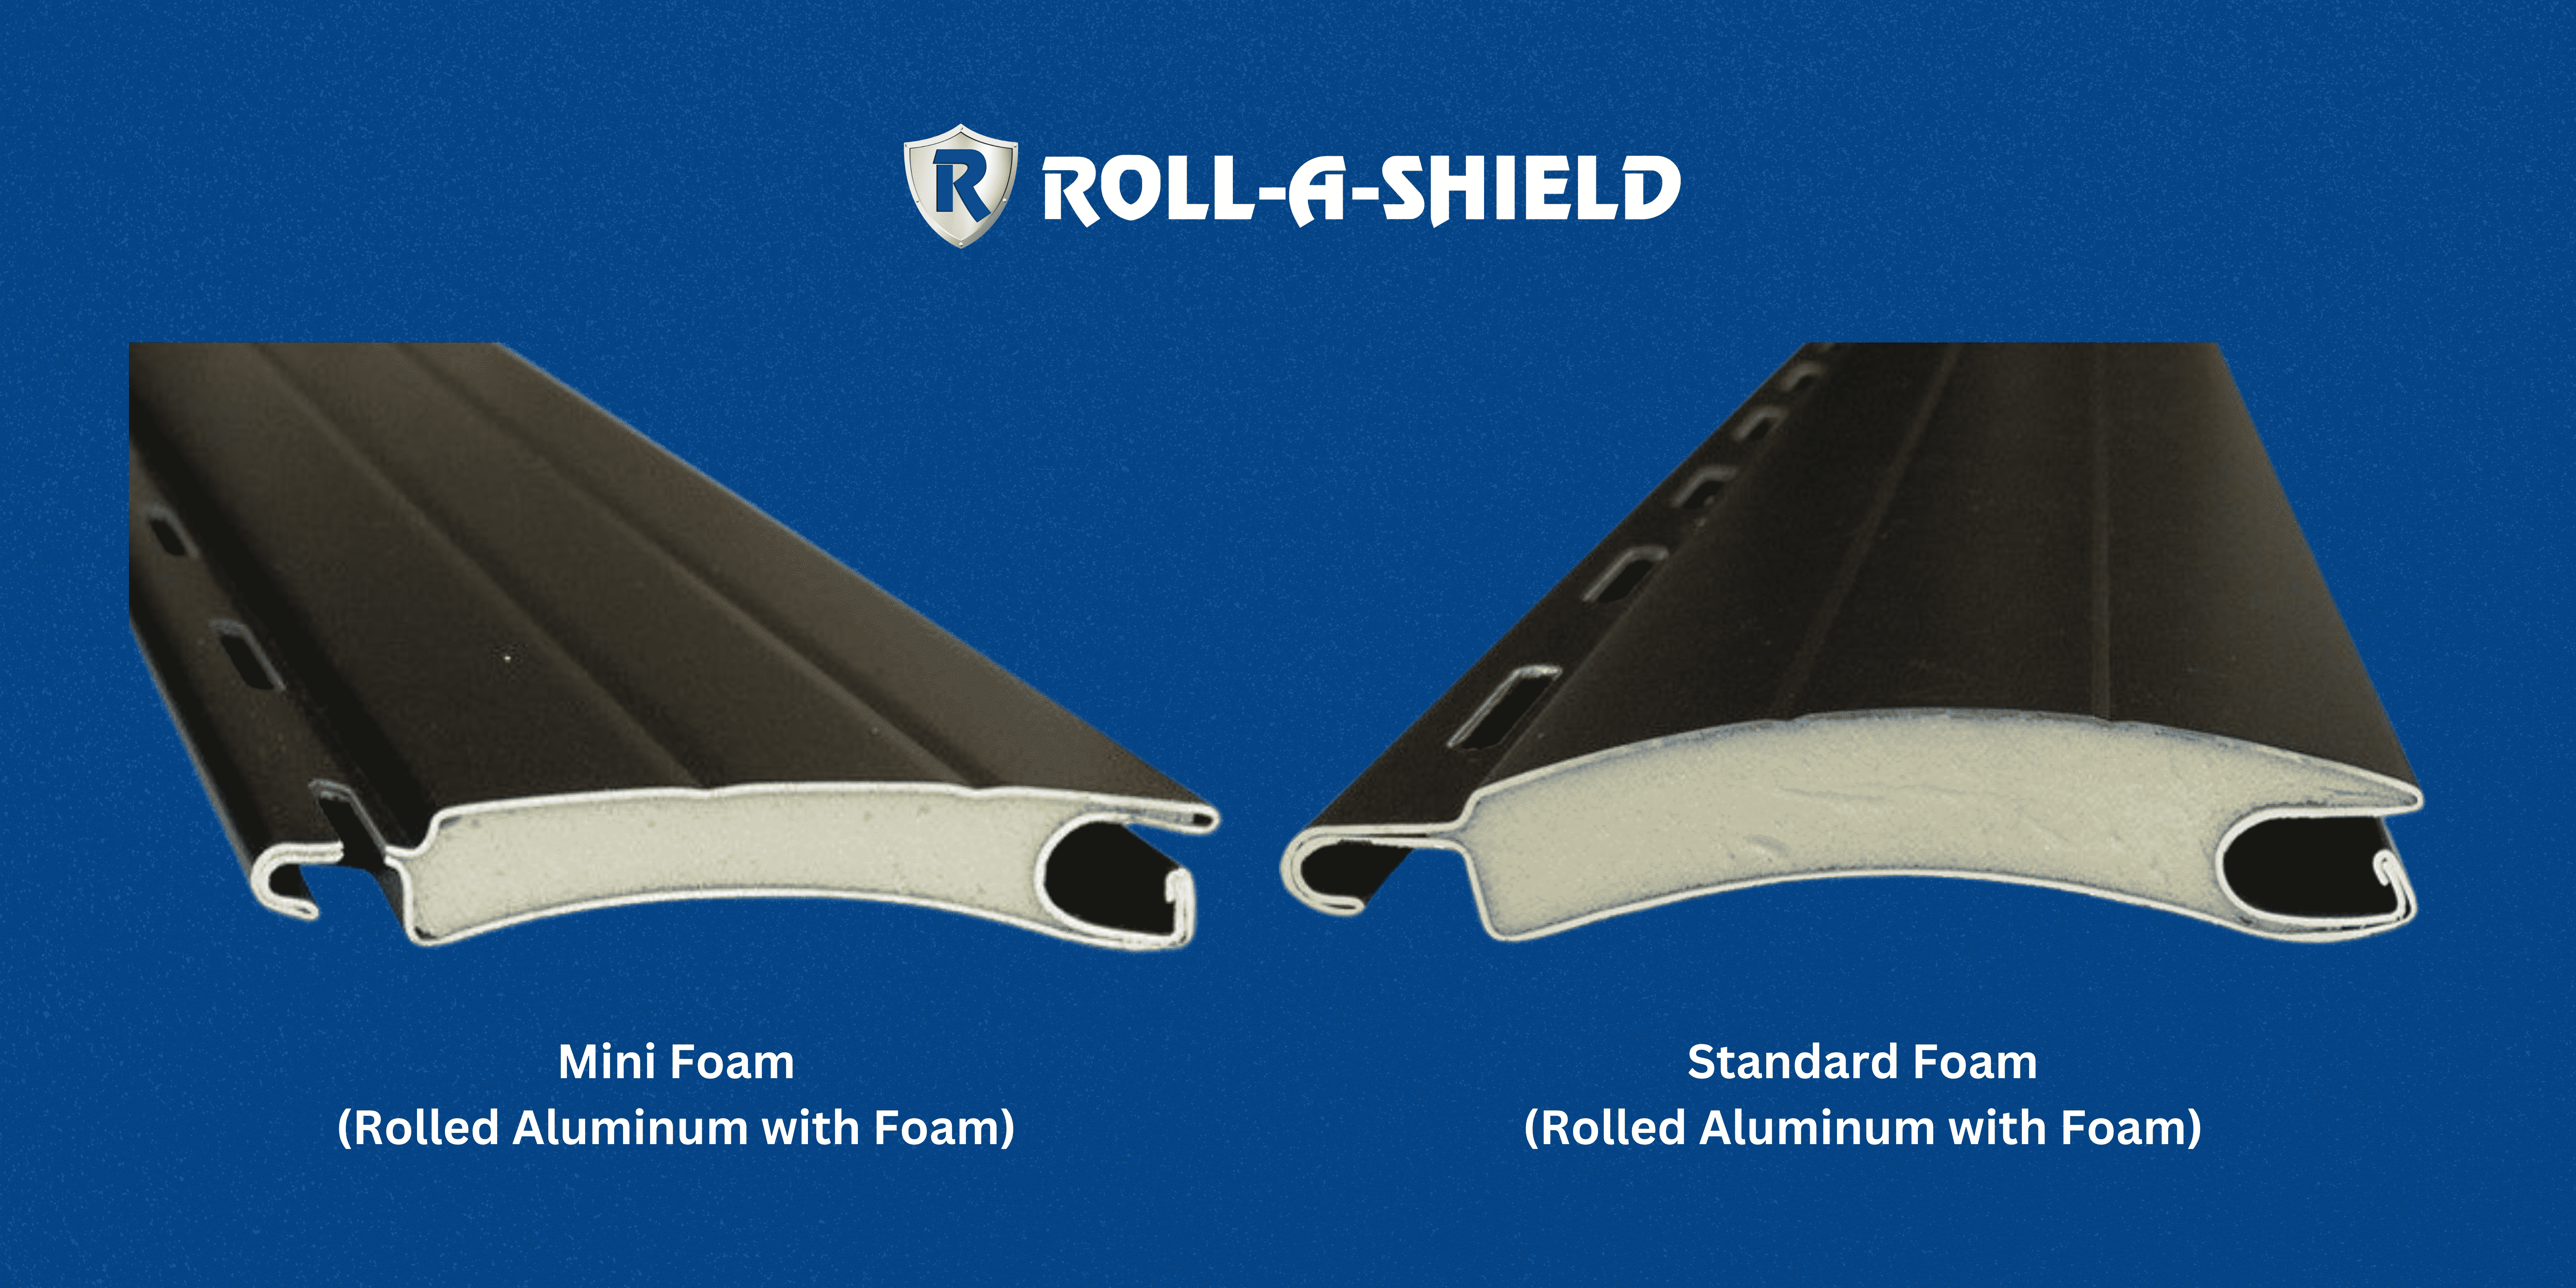 An image showing Roll-A-Shield mini foam extruded aluminum slats and standard foam extruded aluminum slats